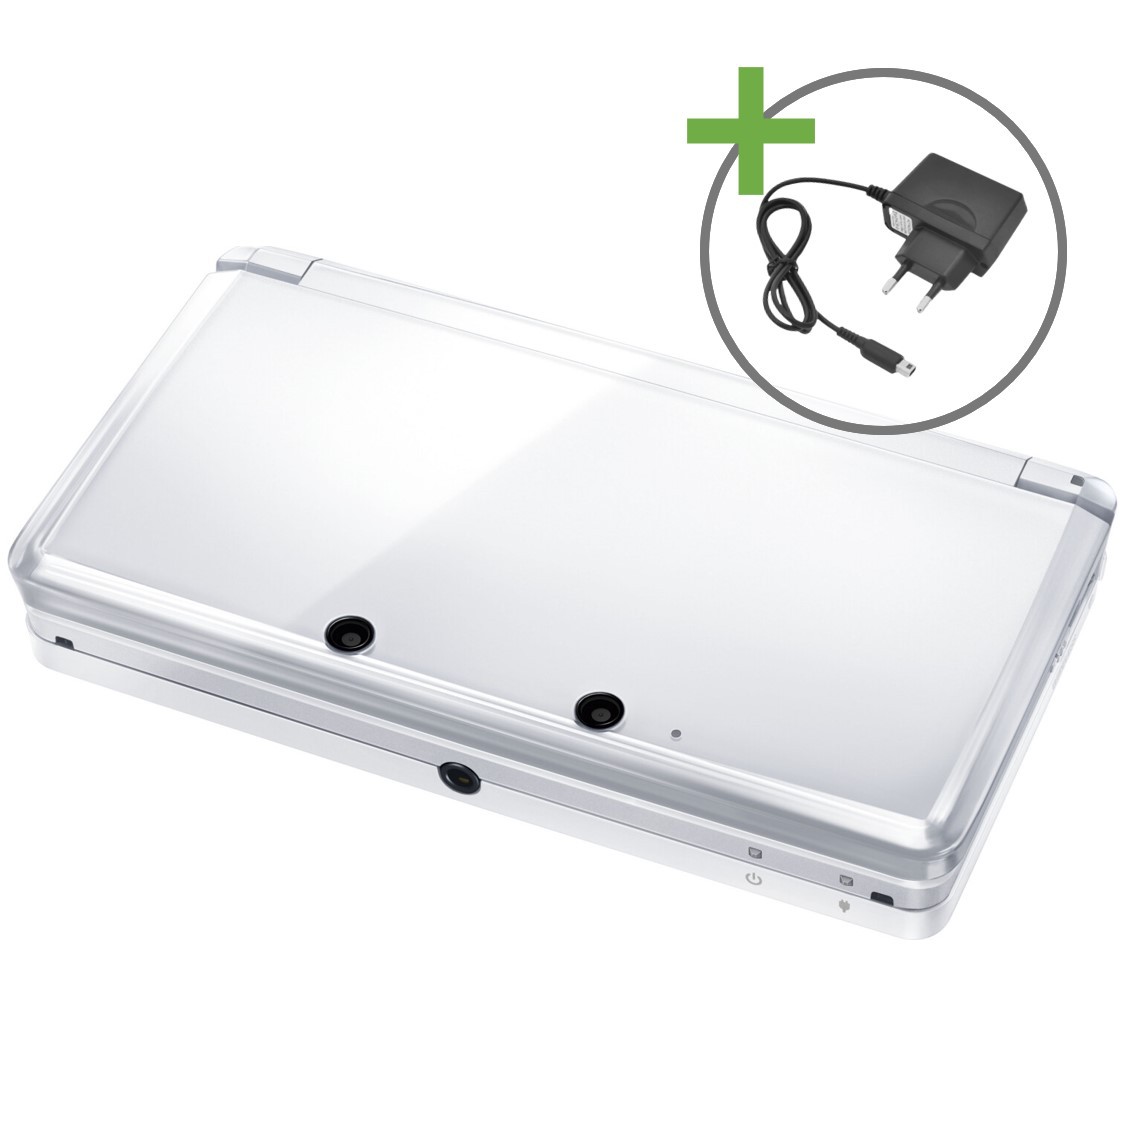 Nintendo 3DS - Ice White - Nintendo 3DS Hardware - 2